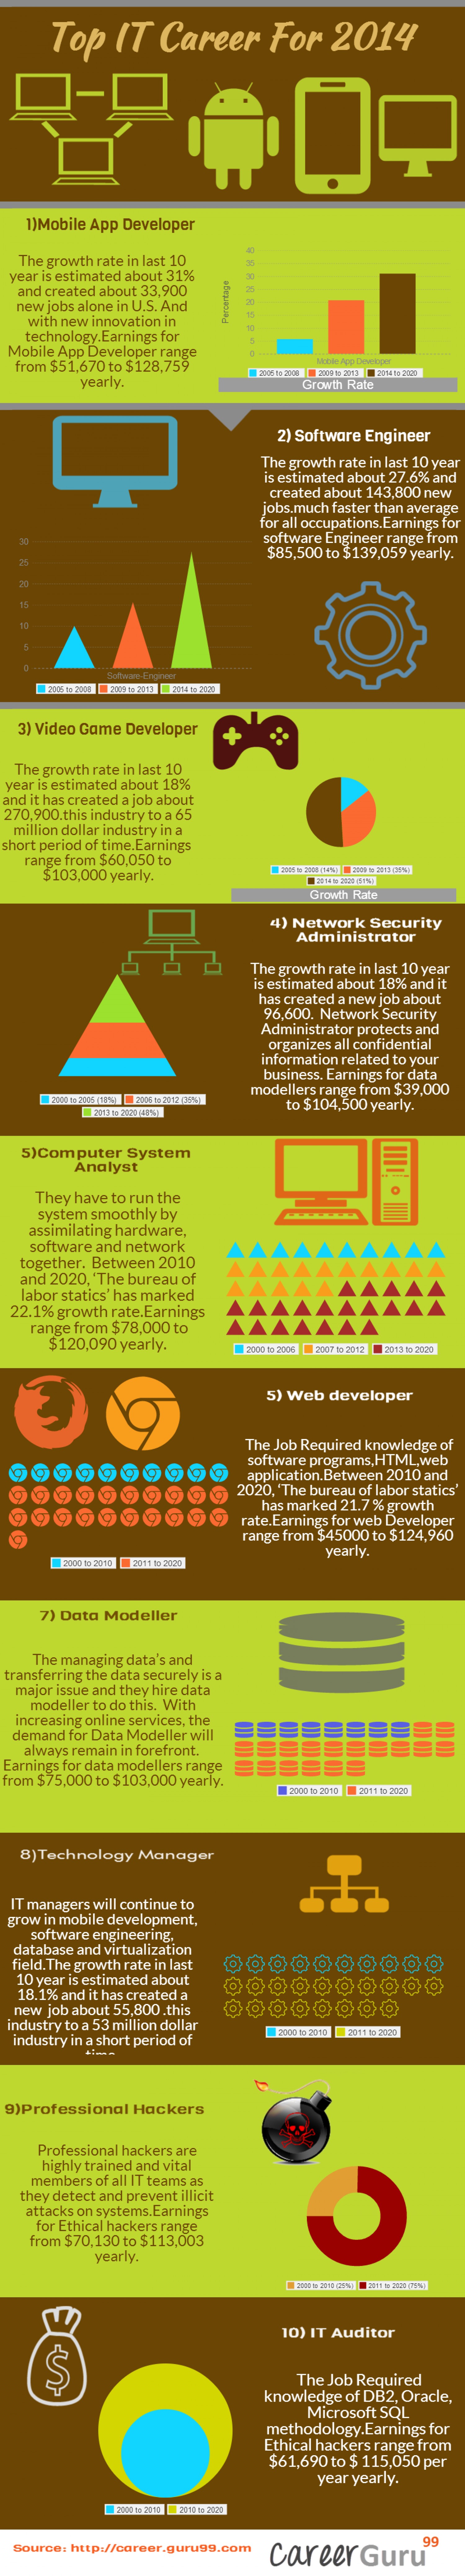 2014 Top IT Jobs (Infographic)